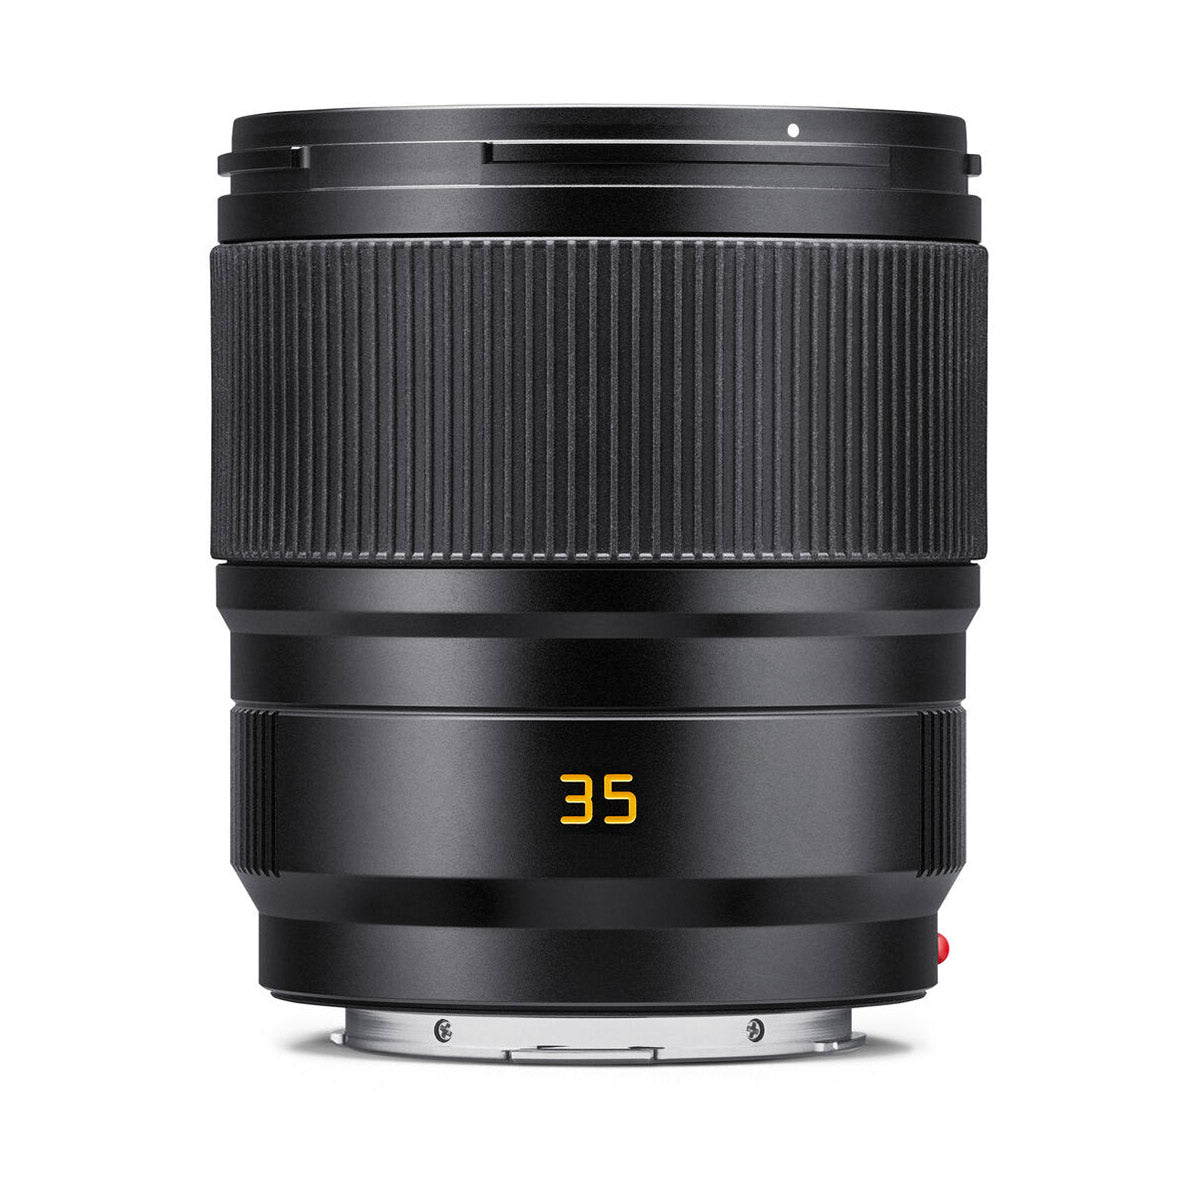 Leica SL2-S Mirrorless Digital Camera with 35mm f/2 Summicron-SL ASPH Lens